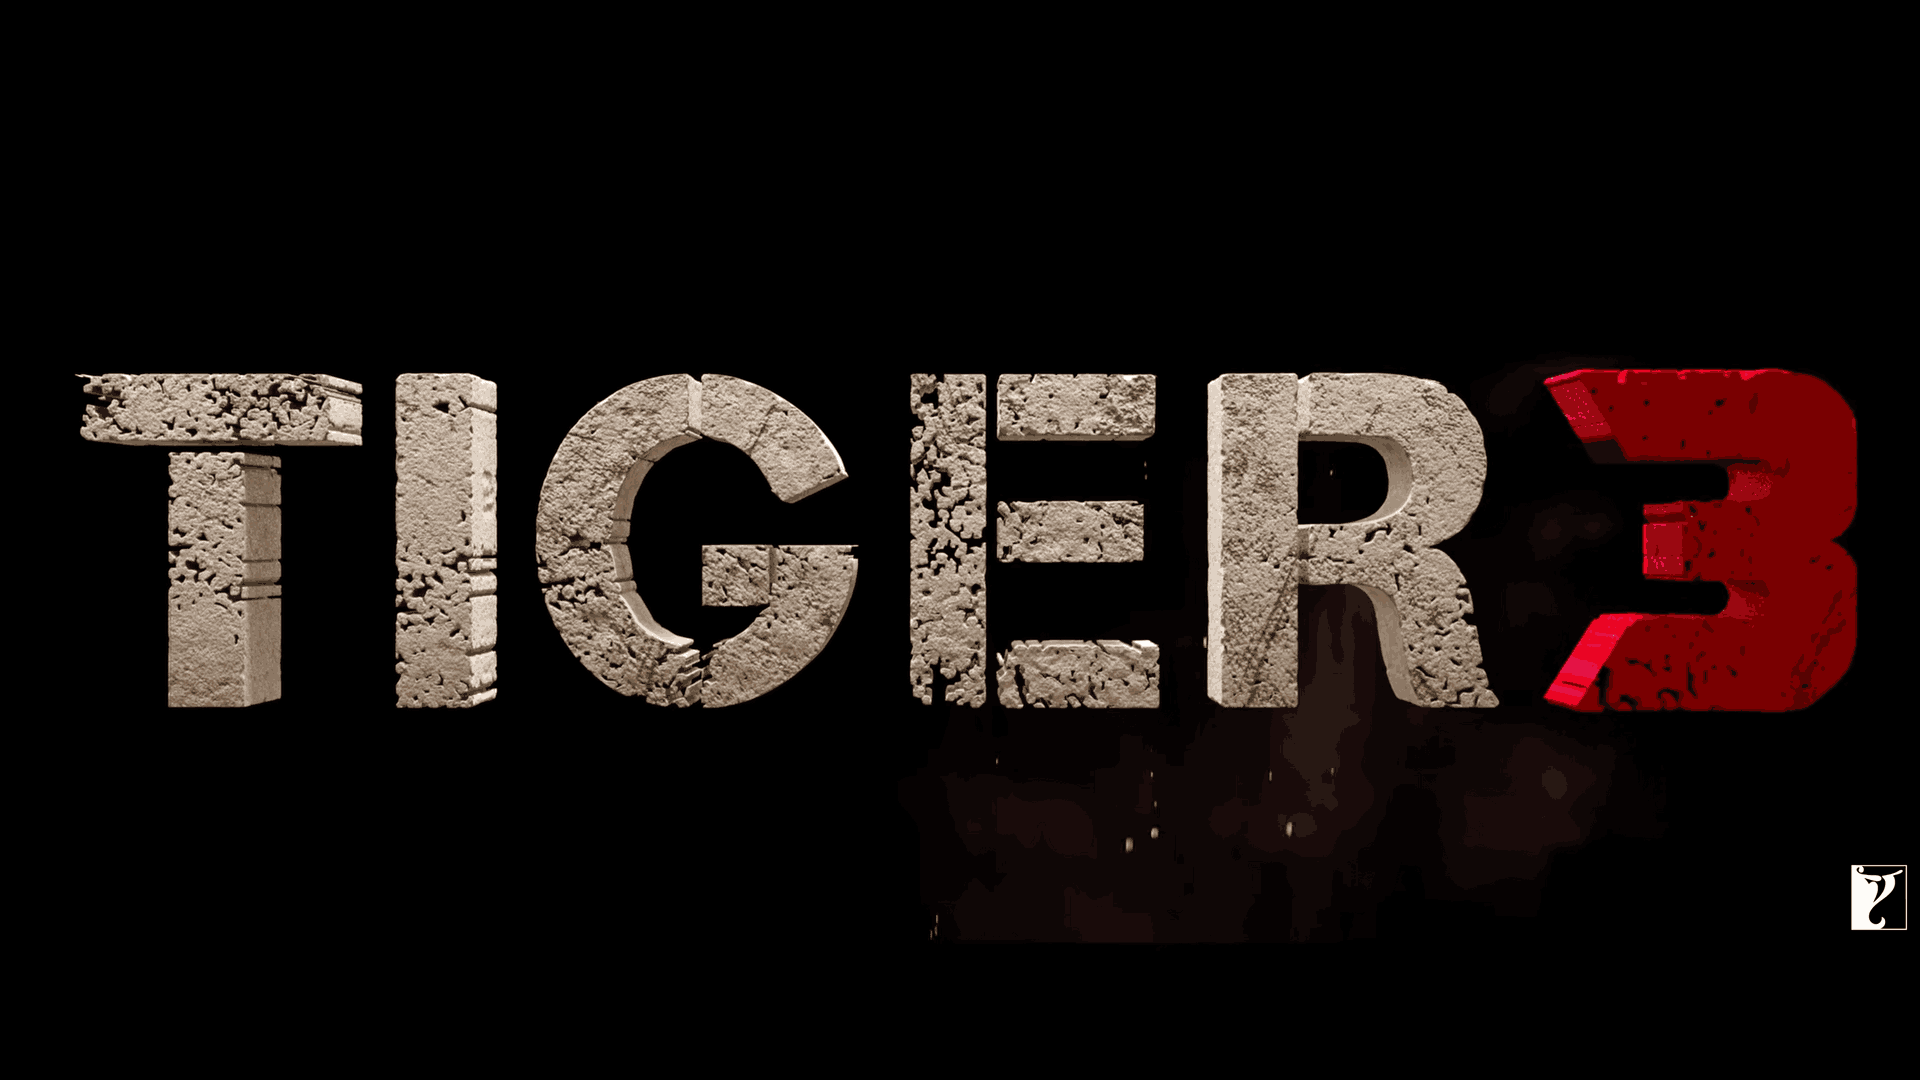 Tiger 3 Full Movie Download 480p, 720p, 1080p, HD